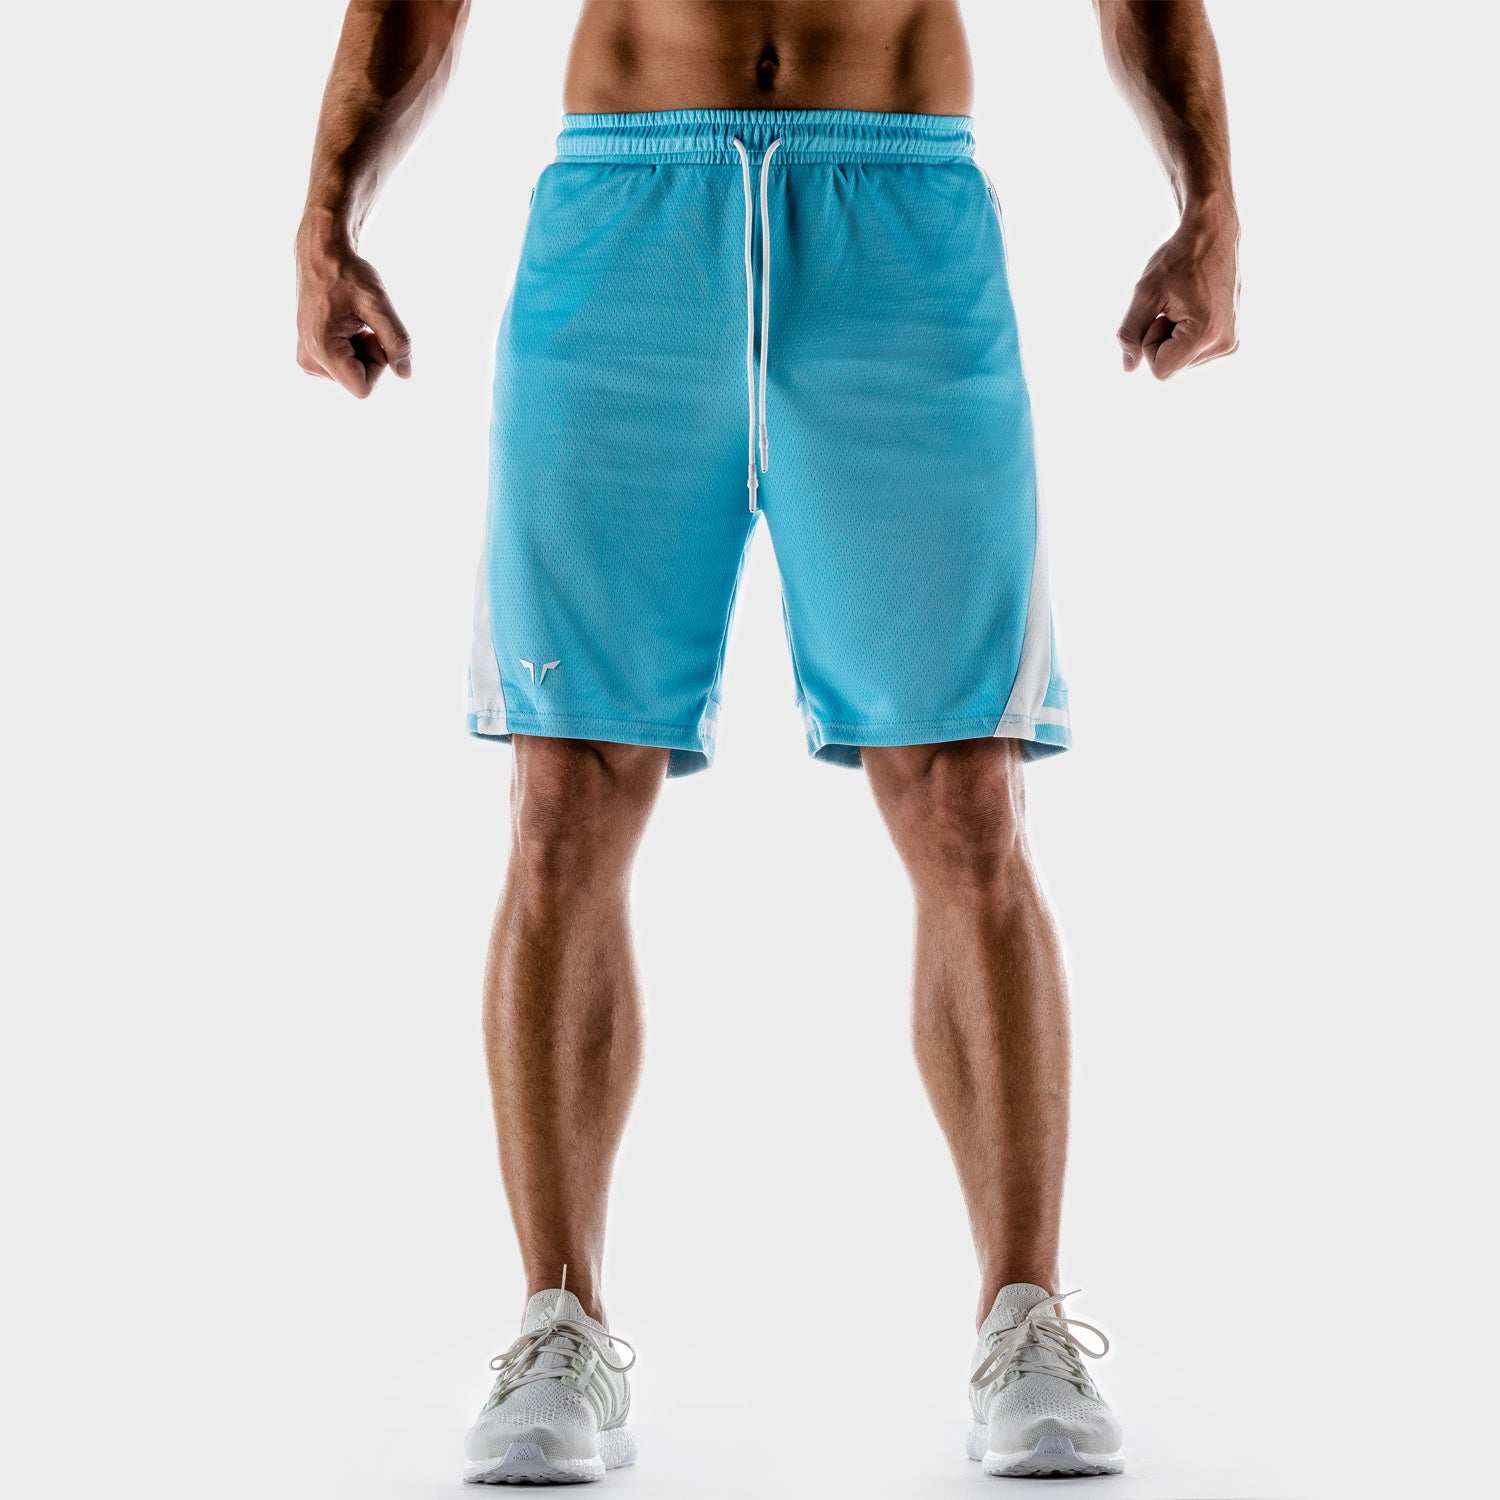 squatwolf-workout-short-for-men-hybrid-2-0-basketball-shorts-blue-gym-wear